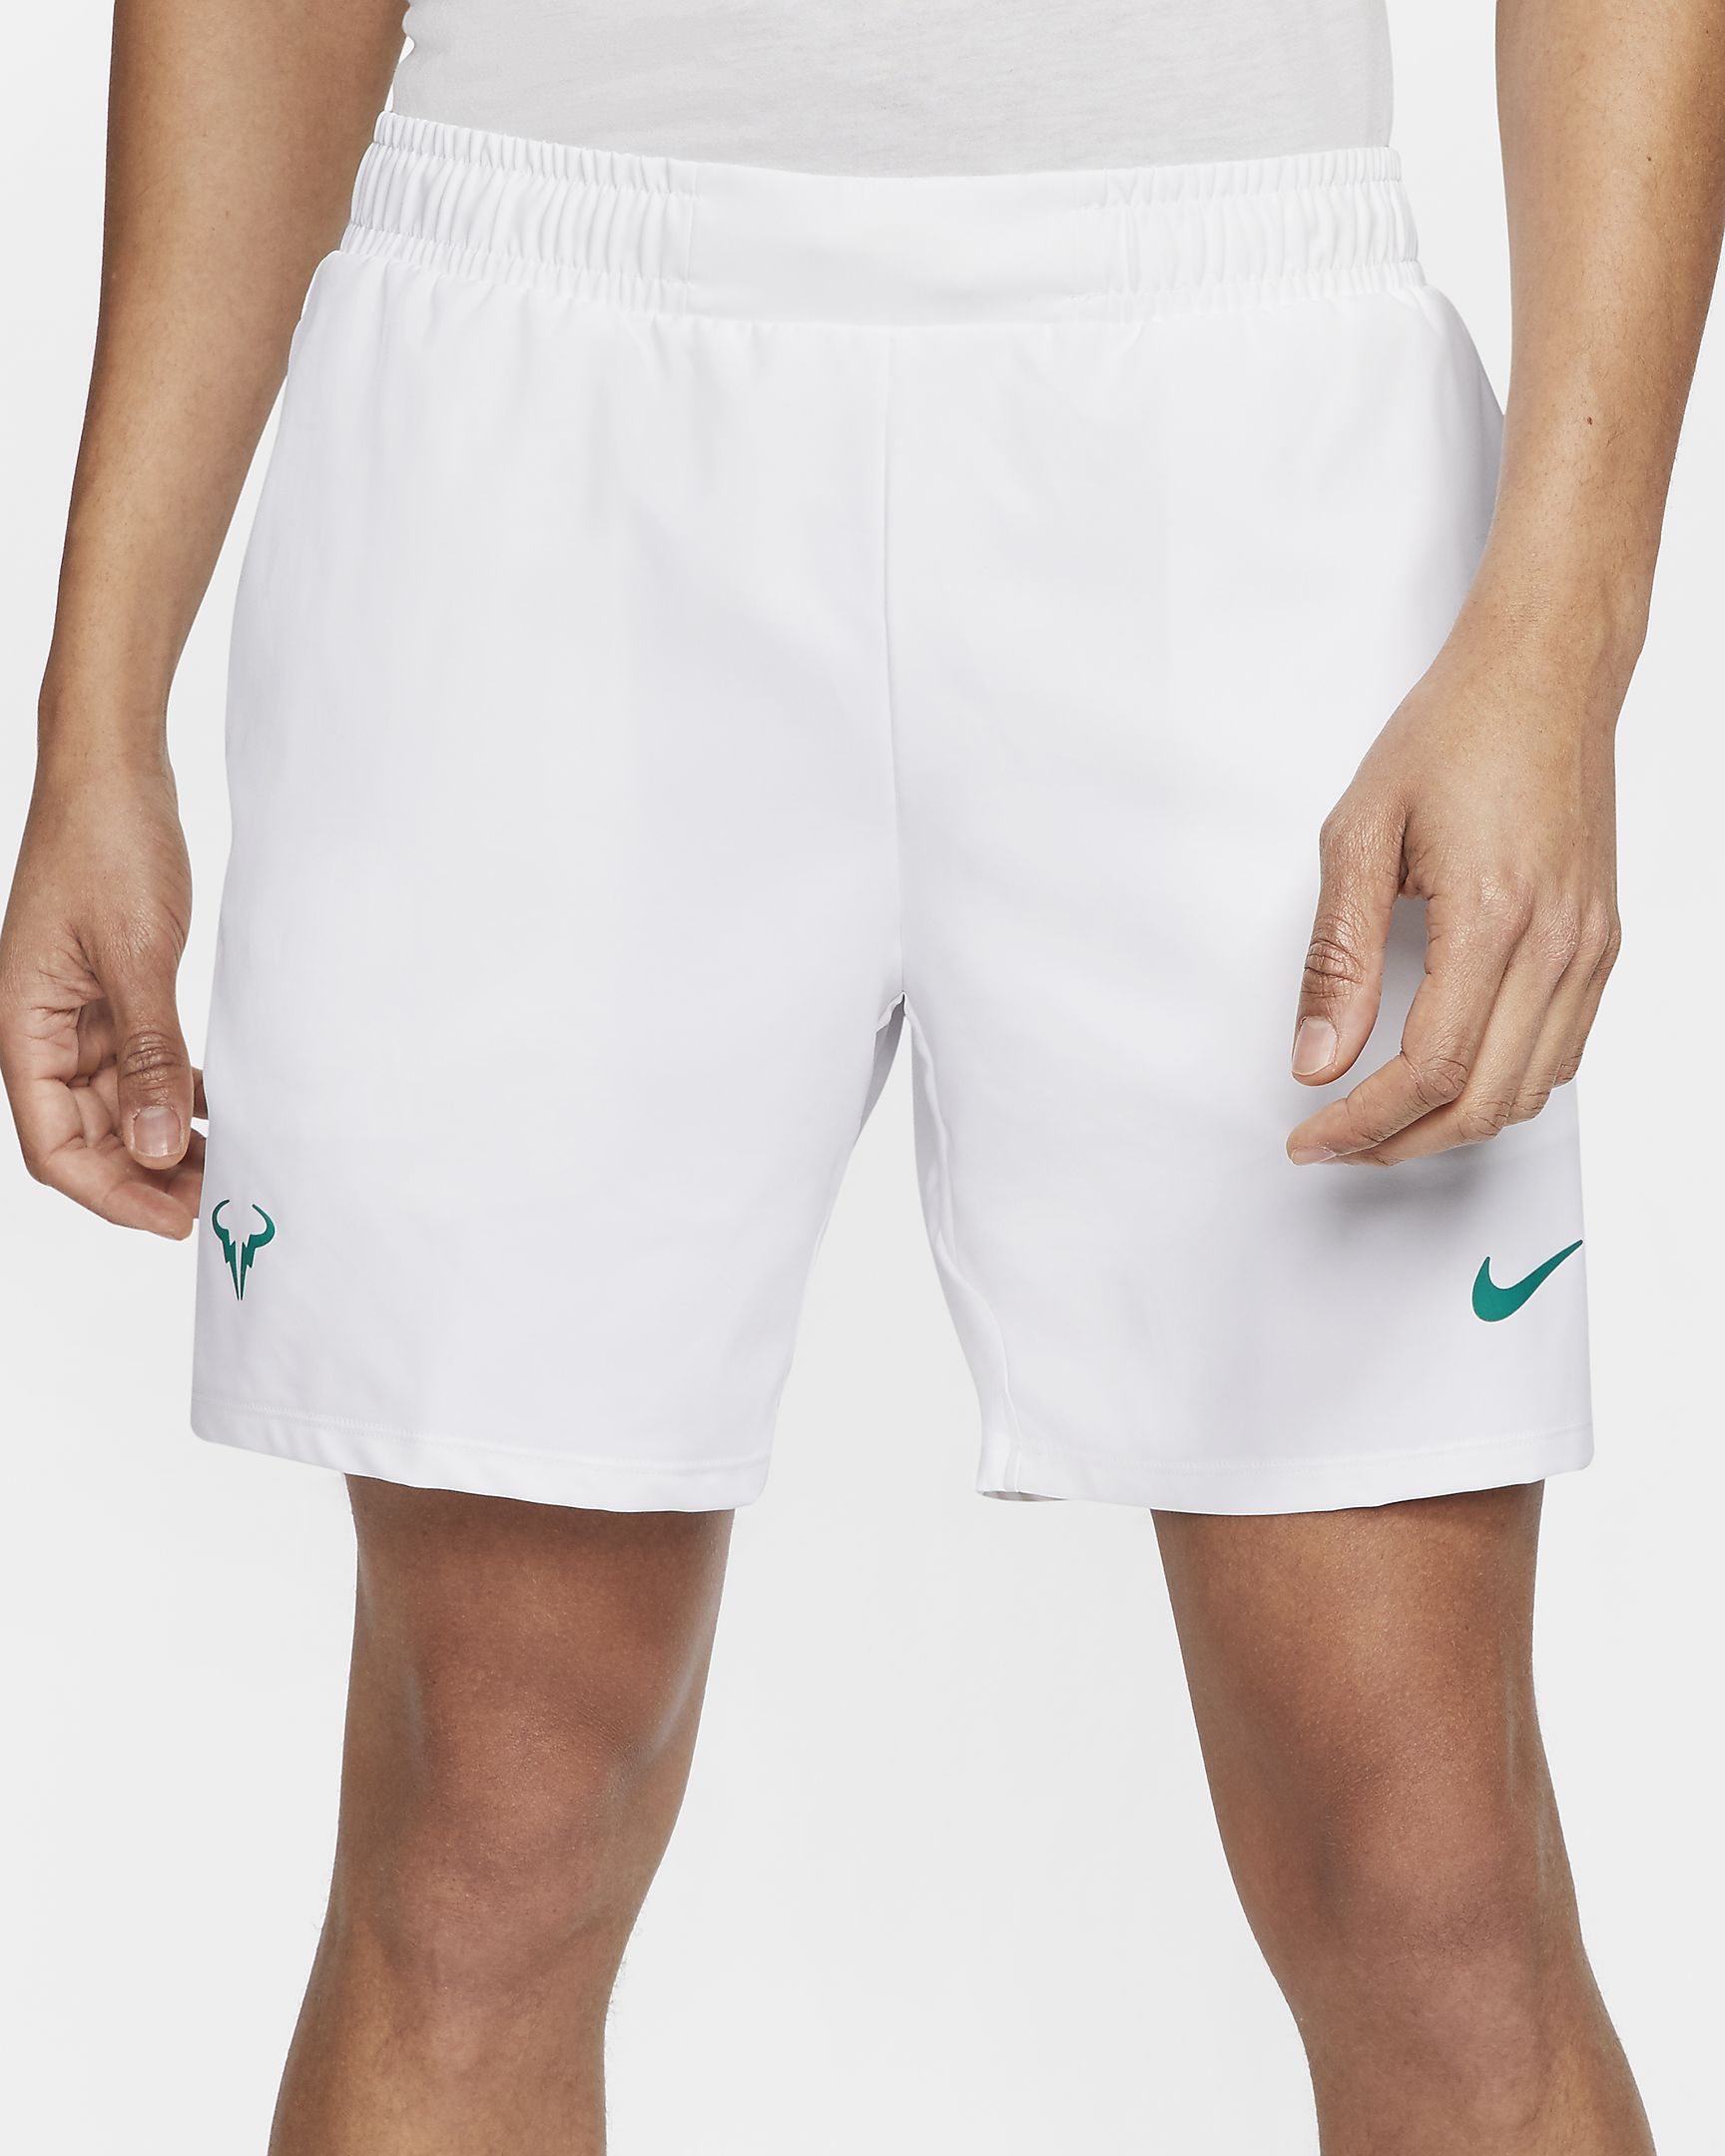 nikecourt-dri-fit-rafa-mens-tennis-shorts-5Q4GPx.jpg